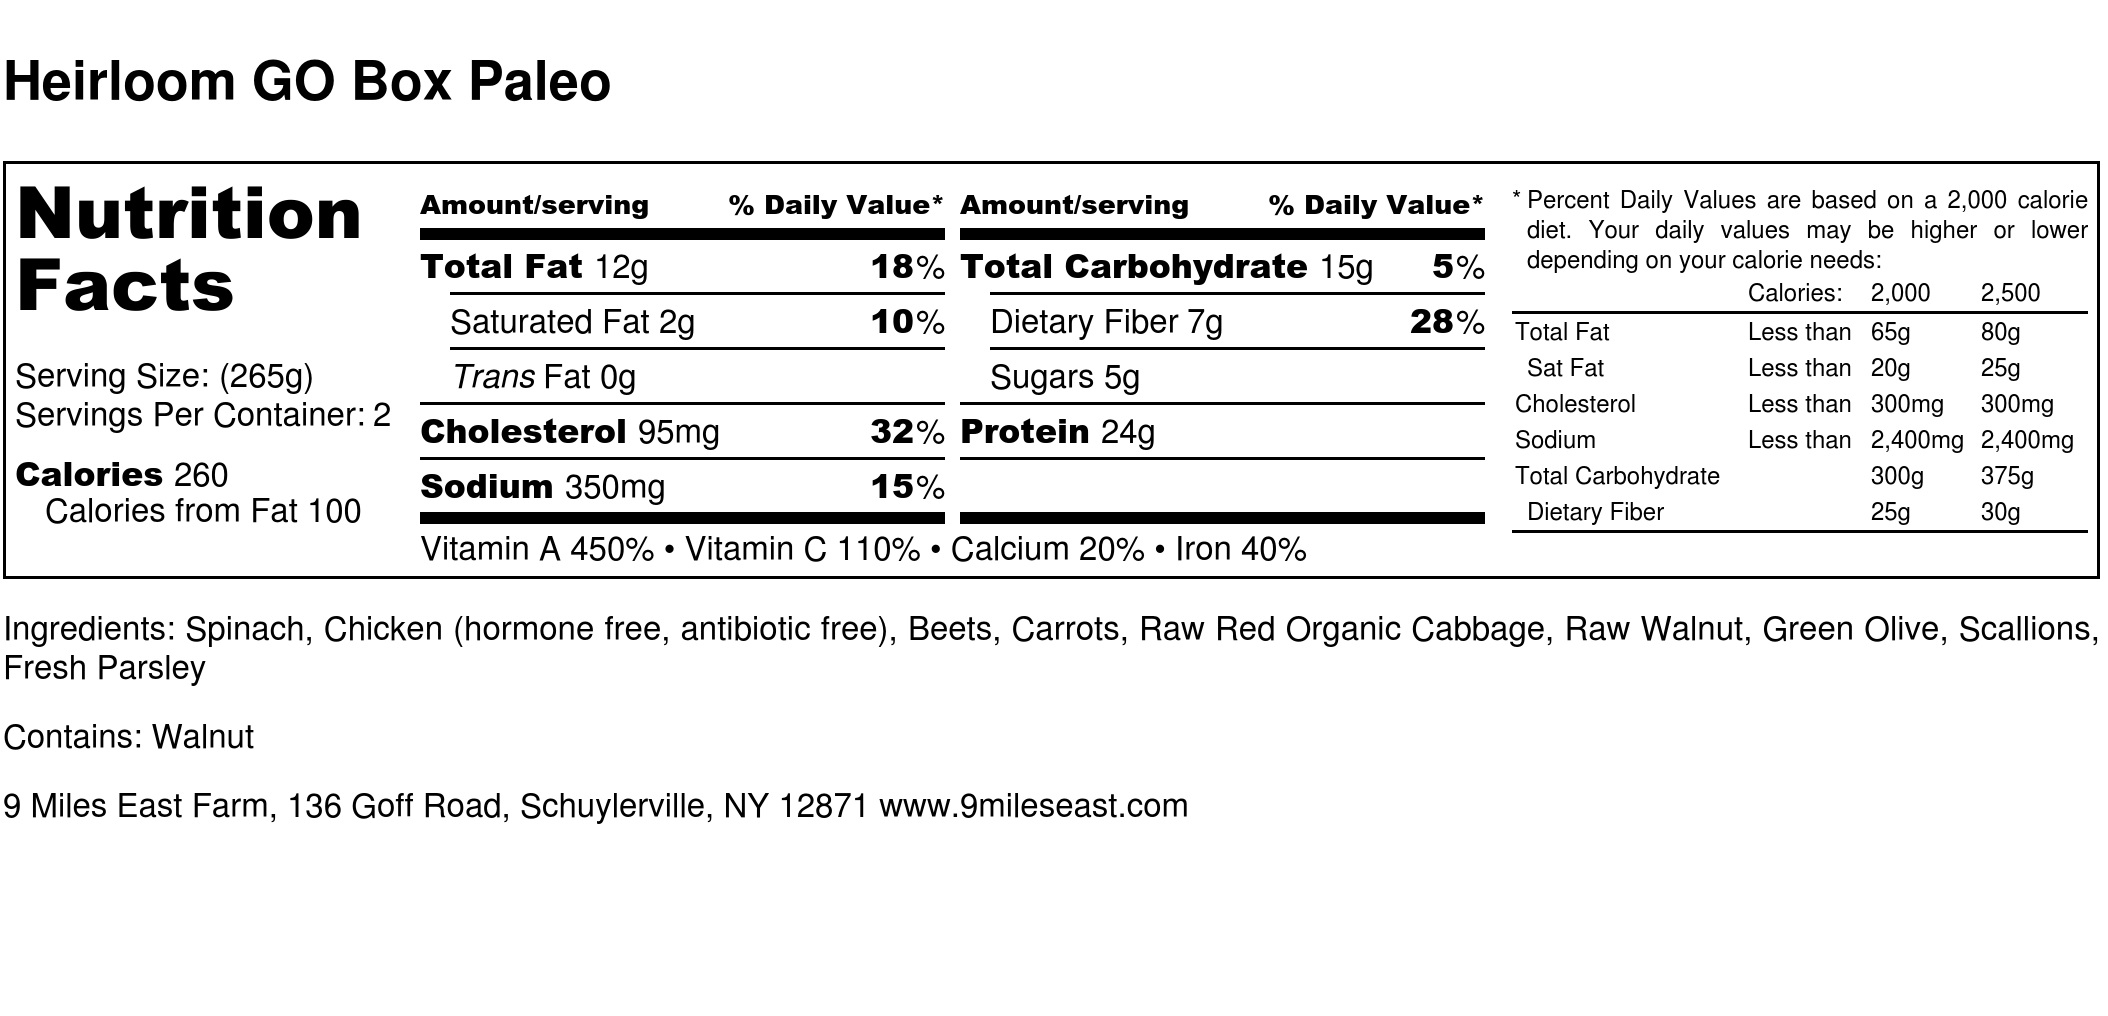 Heirloom GO Box Paleo - Nutrition Label.jpg